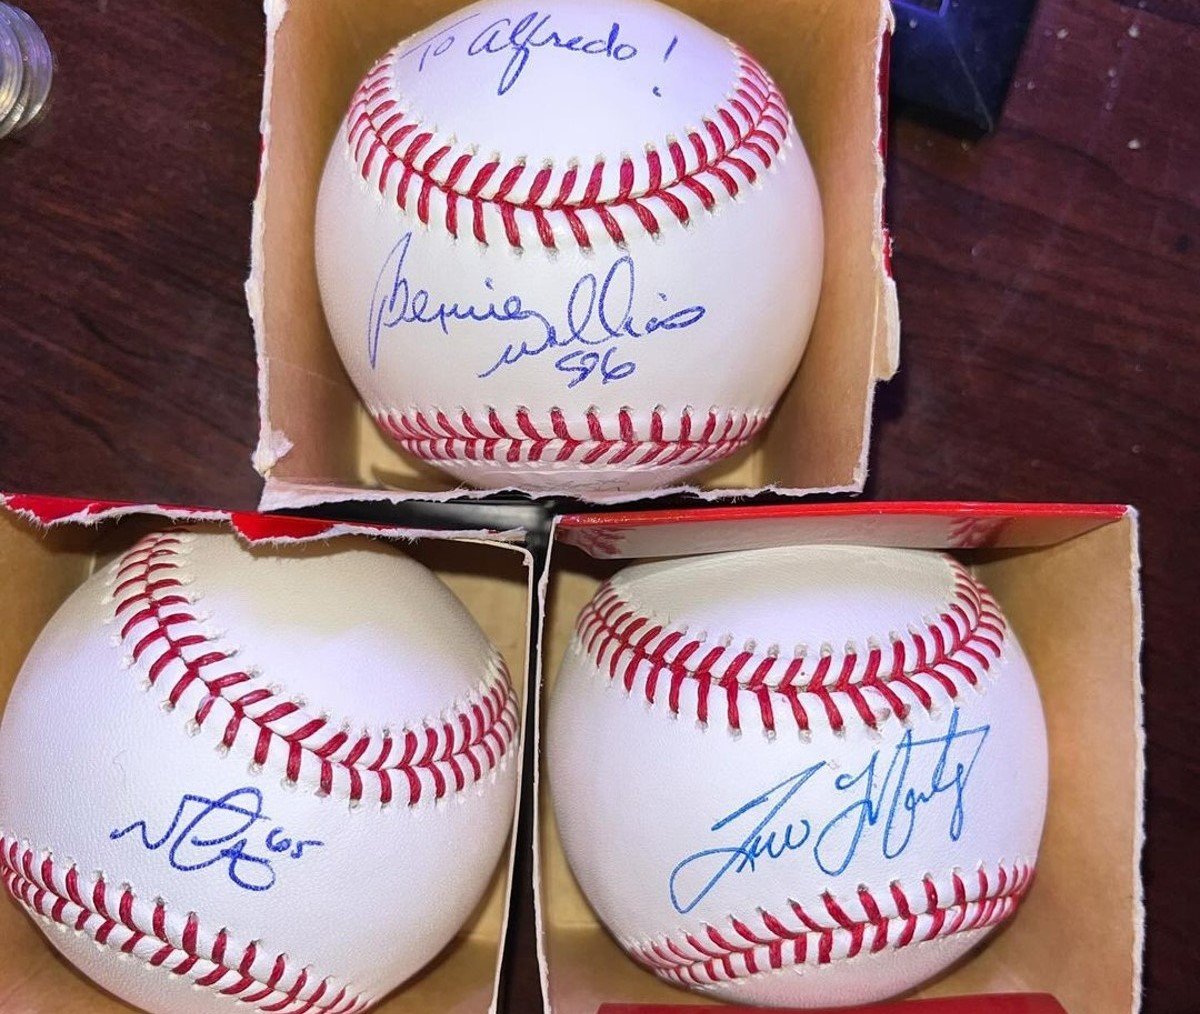 Baseballs signed by Yankees pitching stars.